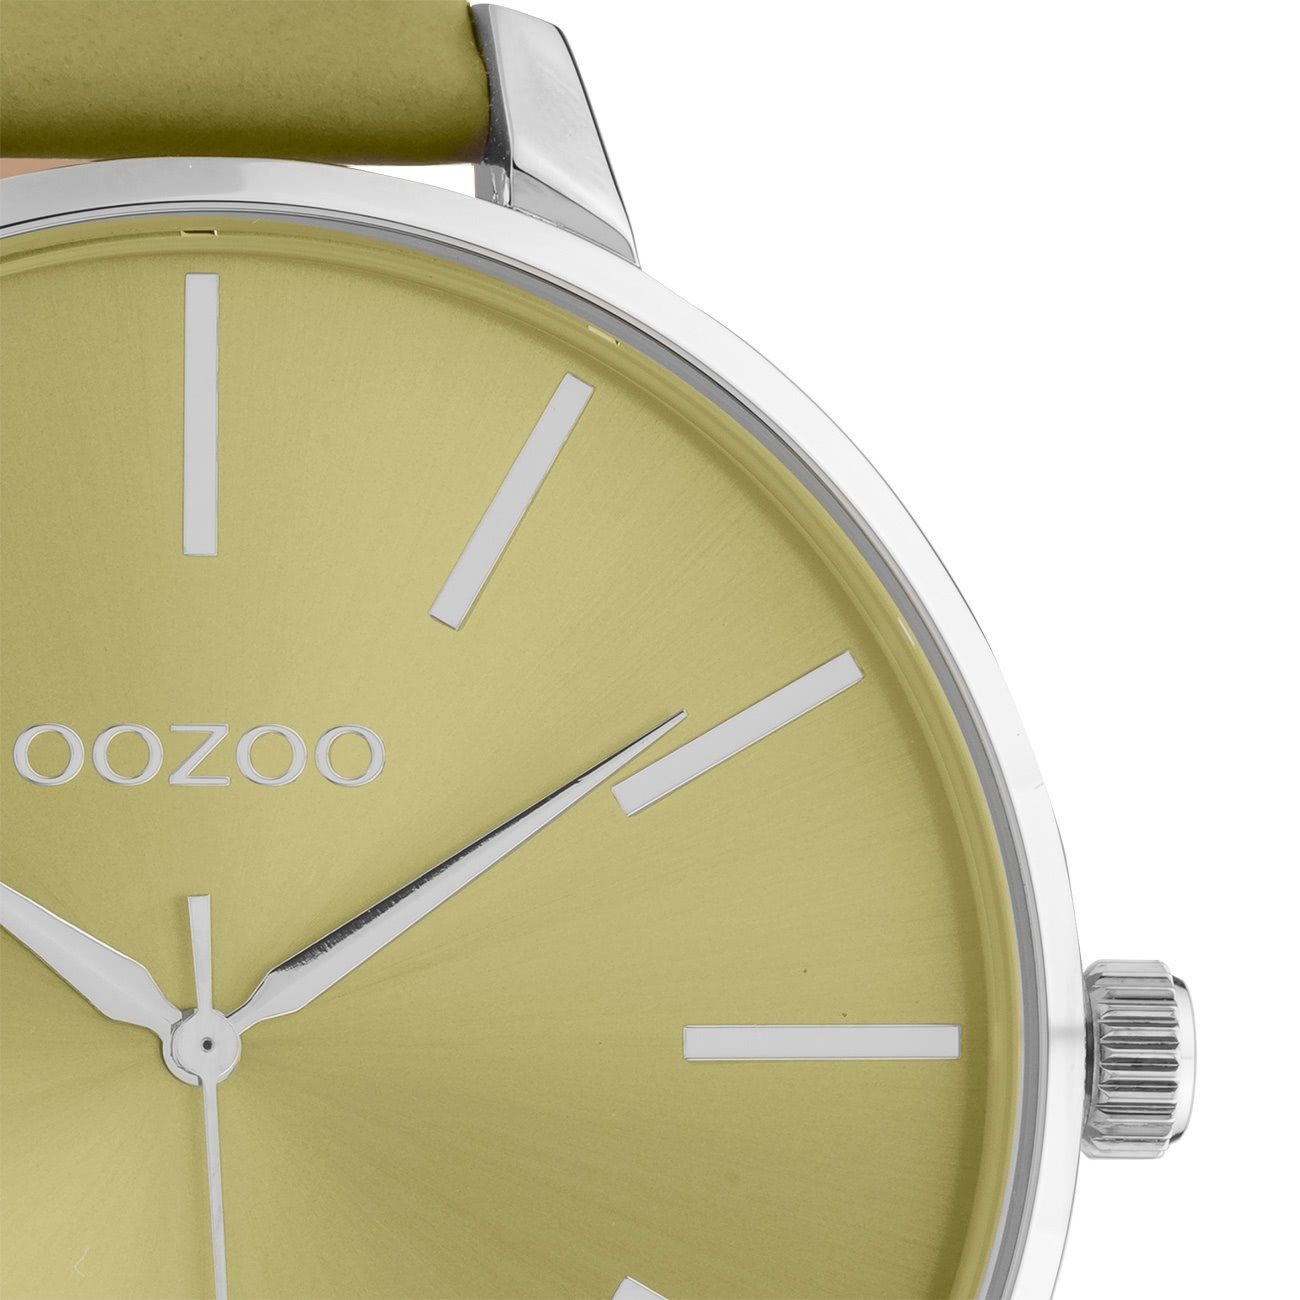 groß (ca. rund, extra OOZOO Timepieces, 48mm) Damen Quarzuhr Fashion-Style Damenuhr Lederarmband, Oozoo Armbanduhr